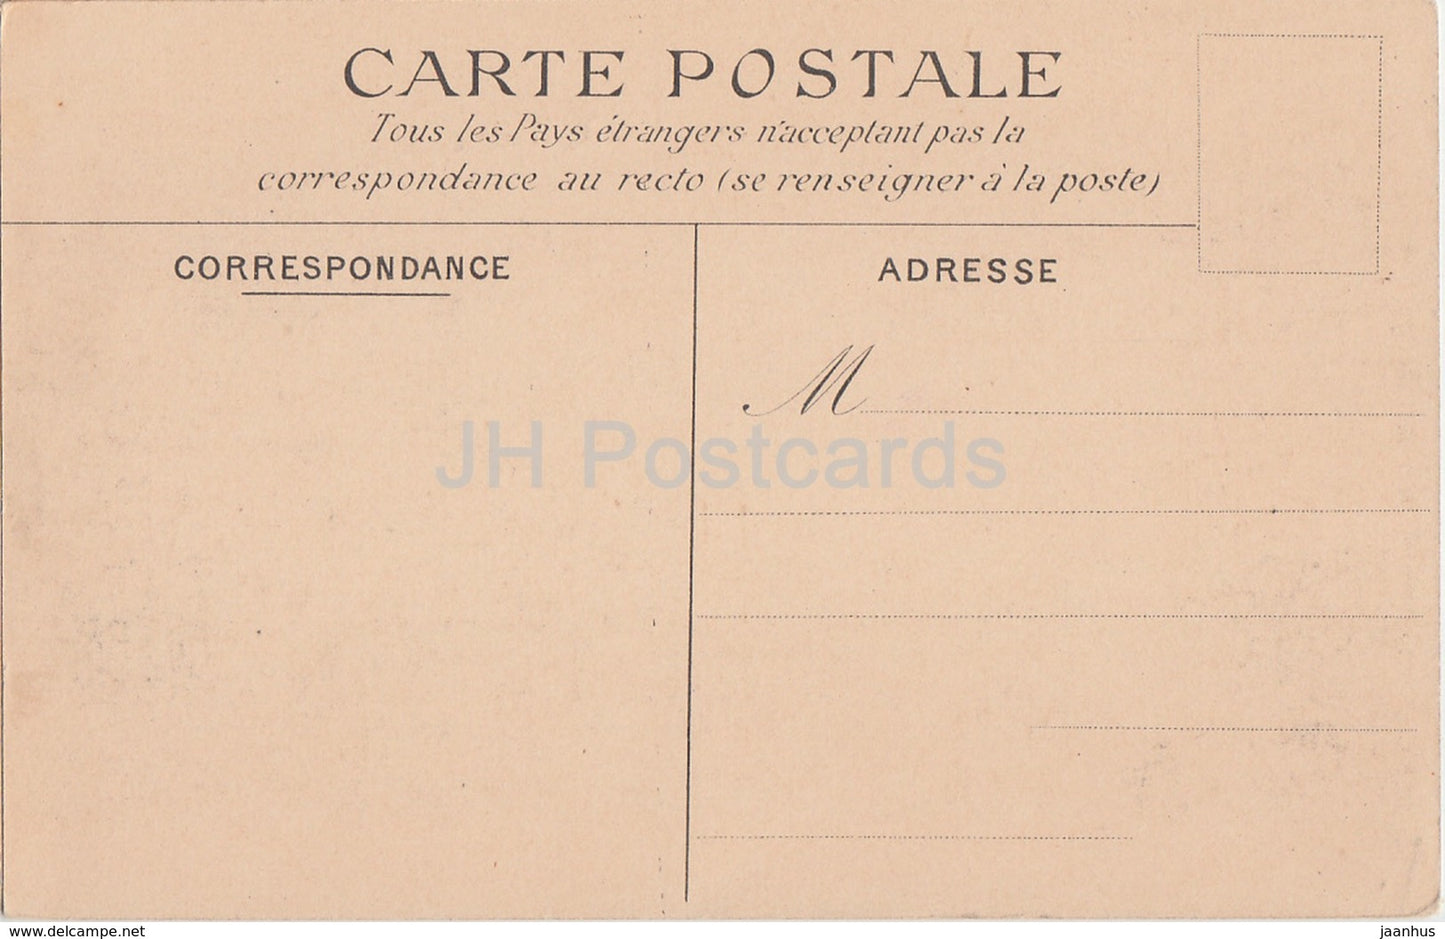 Villefort - Environs - Chateau du Chambonnet - castle - 43 - old postcard - France - unused